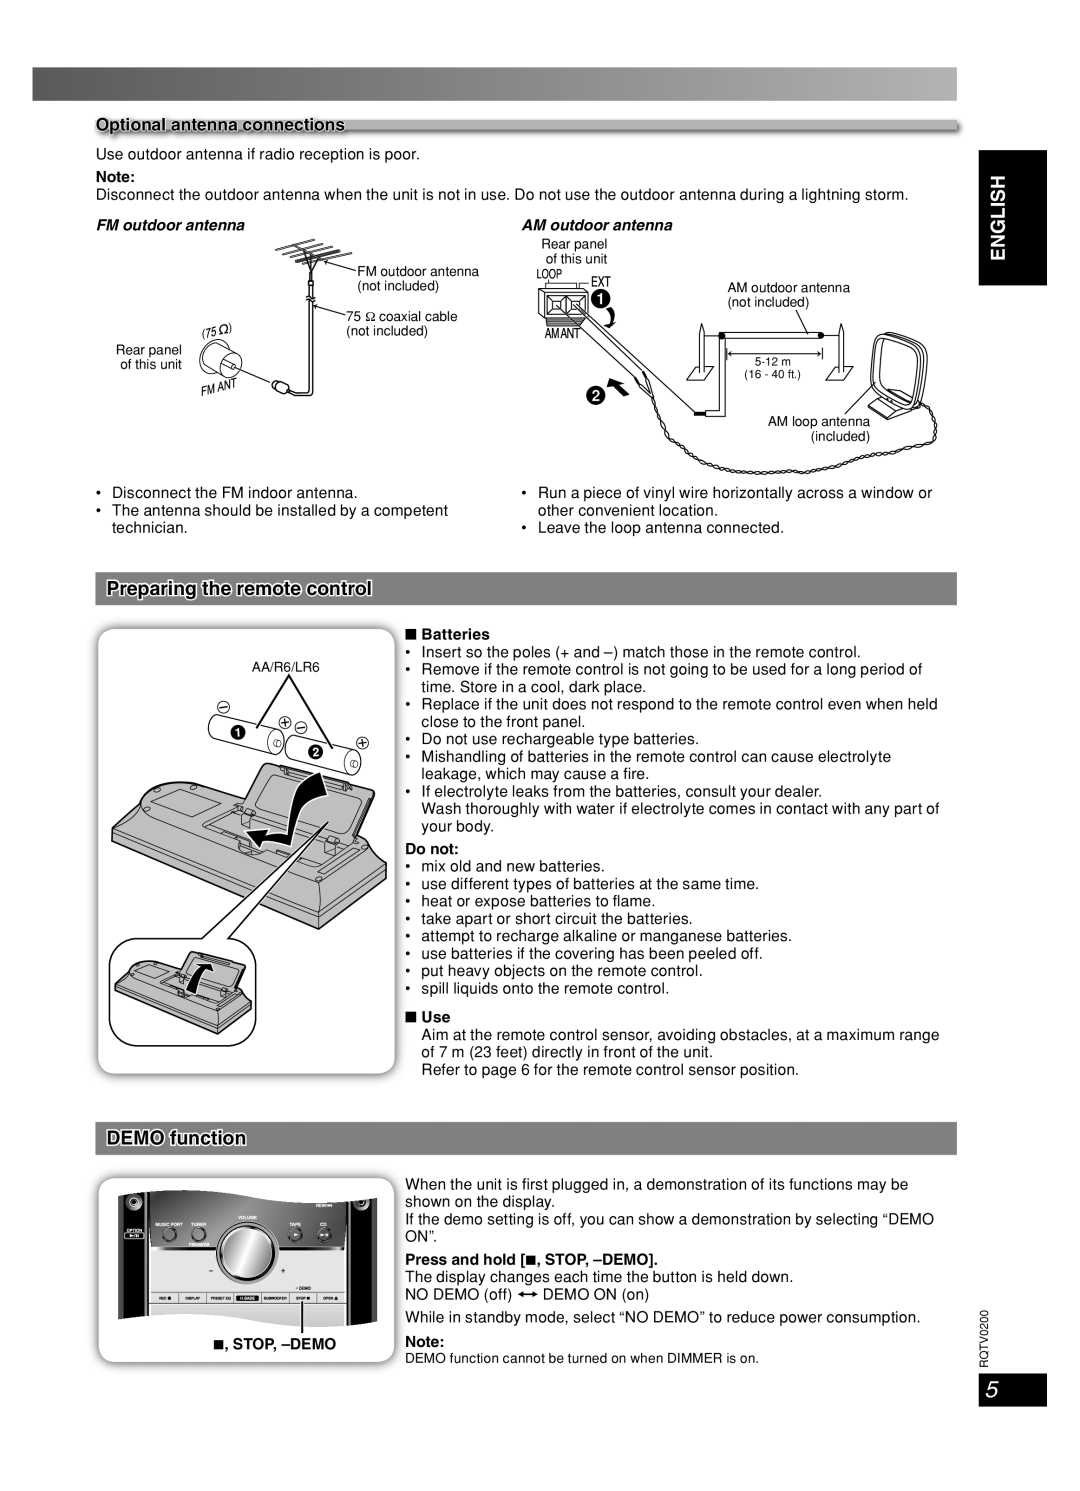 Panasonic SC-AK750, 377 English, Preparing the remote control, Français Lang, DEMO function, Dansk, FM outdoor antenna 